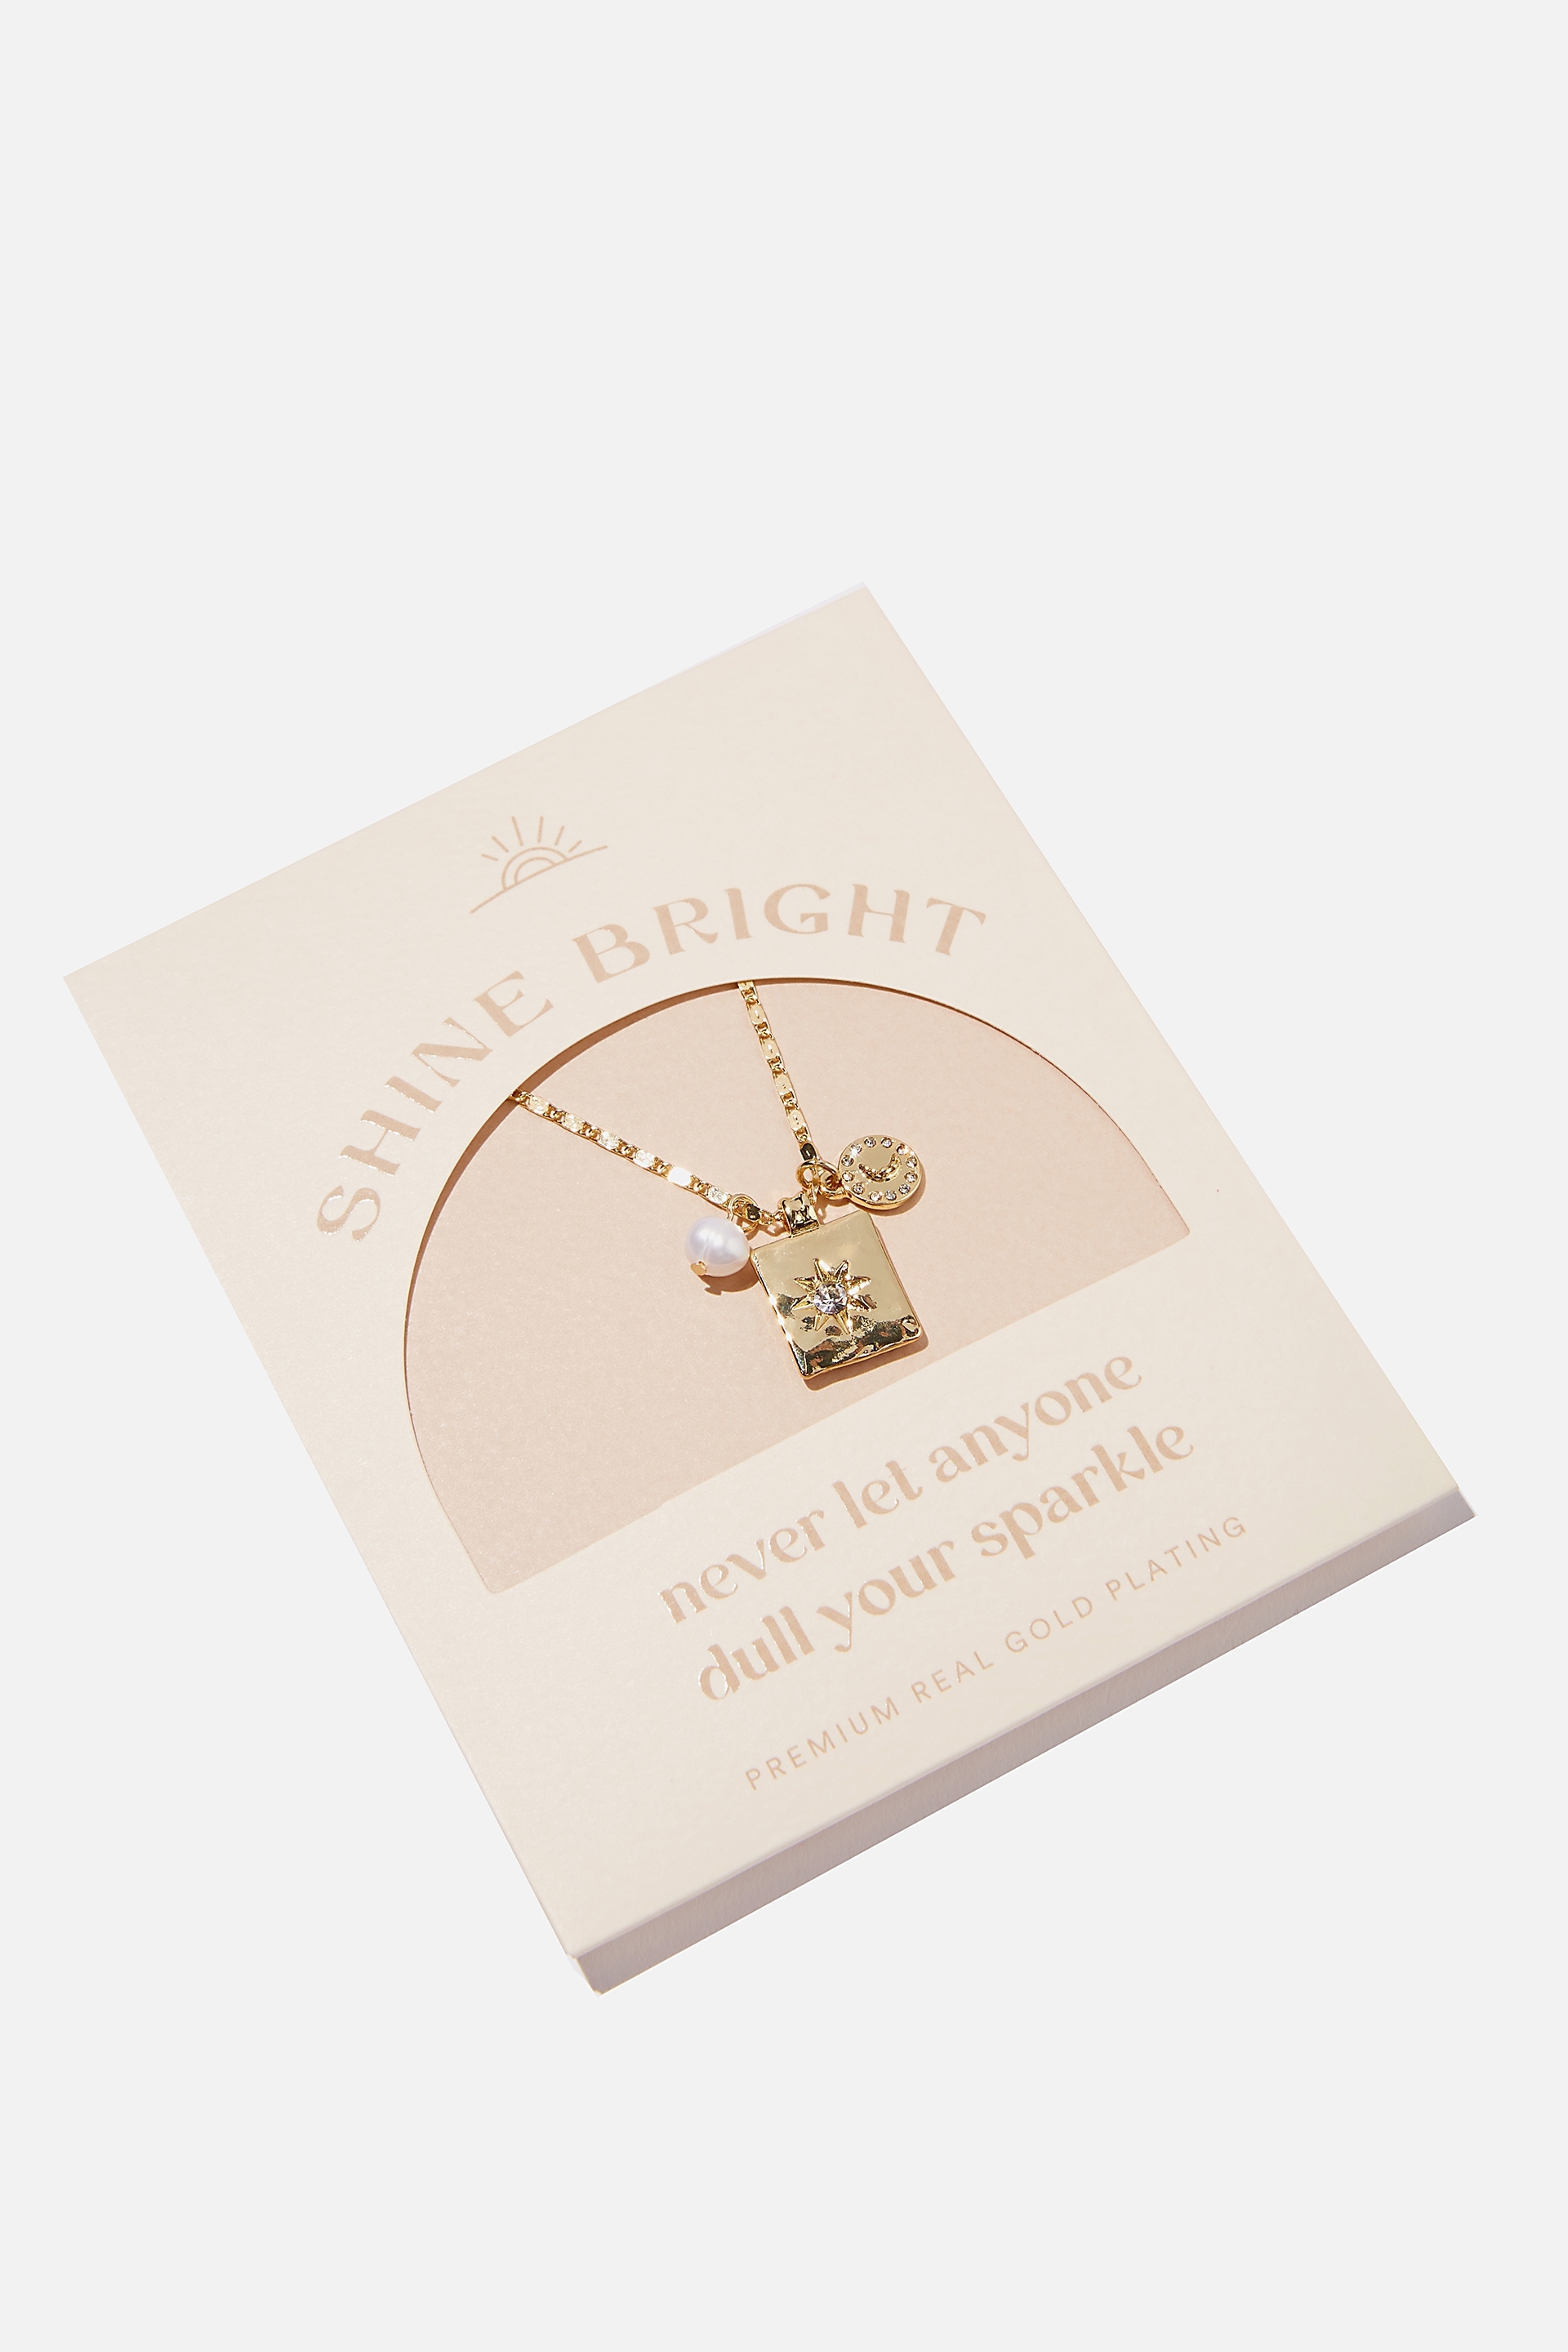 Rubi - Premium Treasures Necklace - Gold plated celestial star